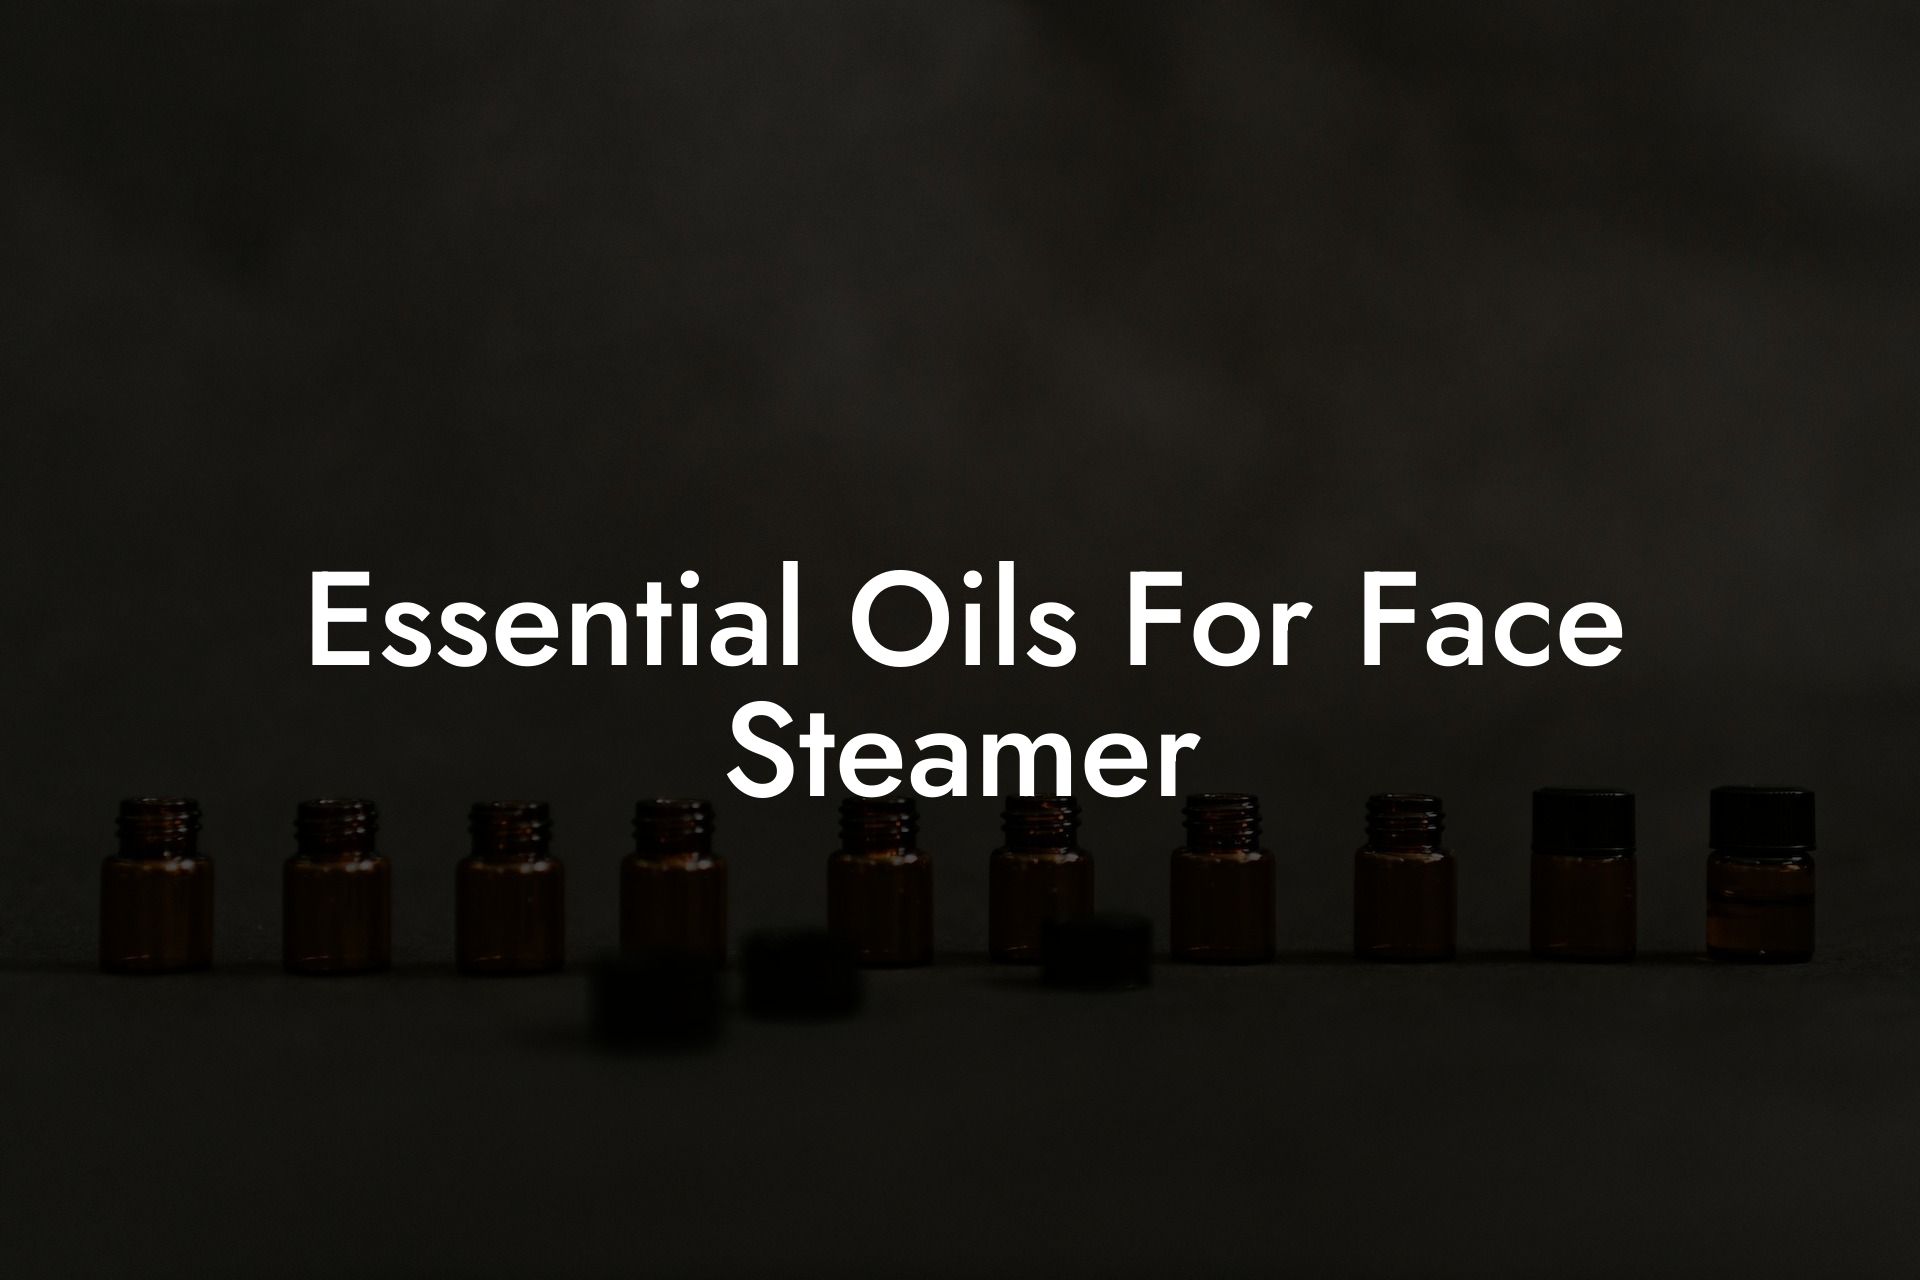 Essential Oils For Face Steamer